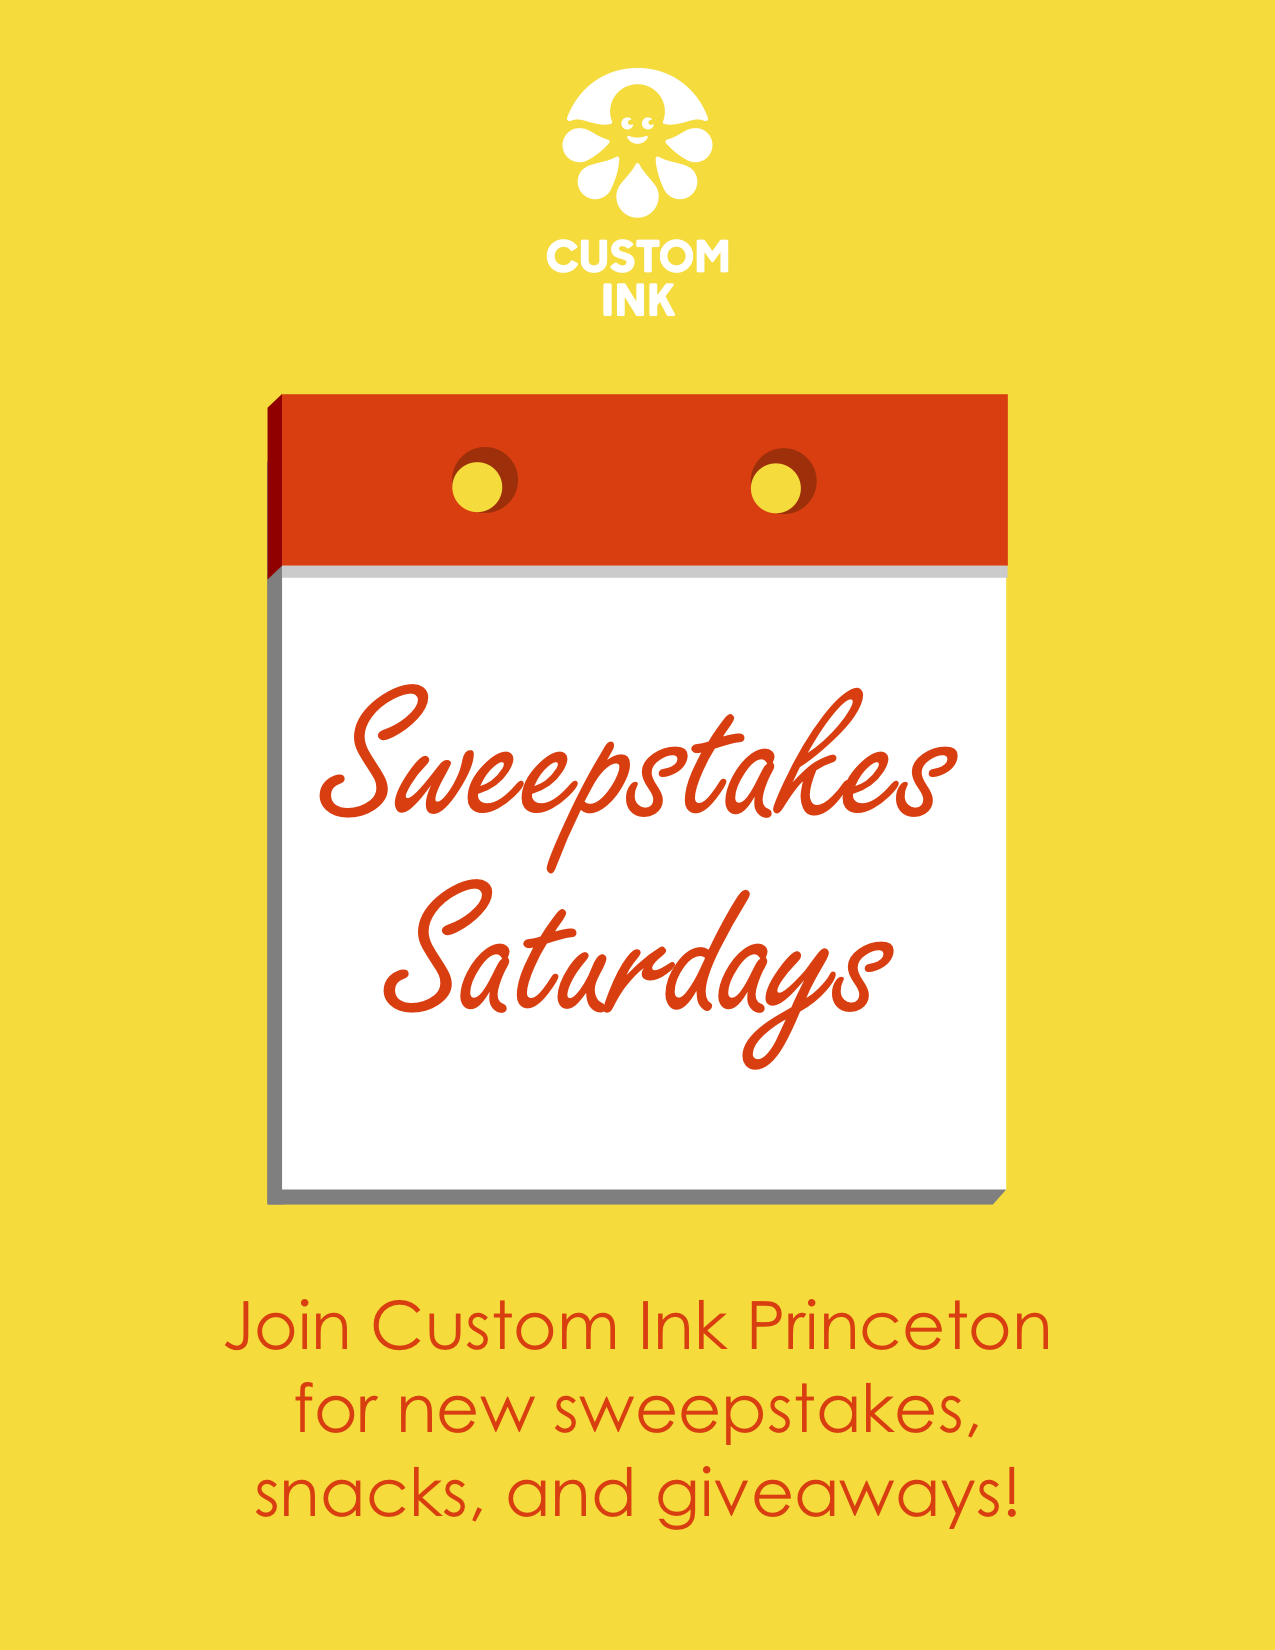 Custom Ink Sweepstakes Saturday Flyer